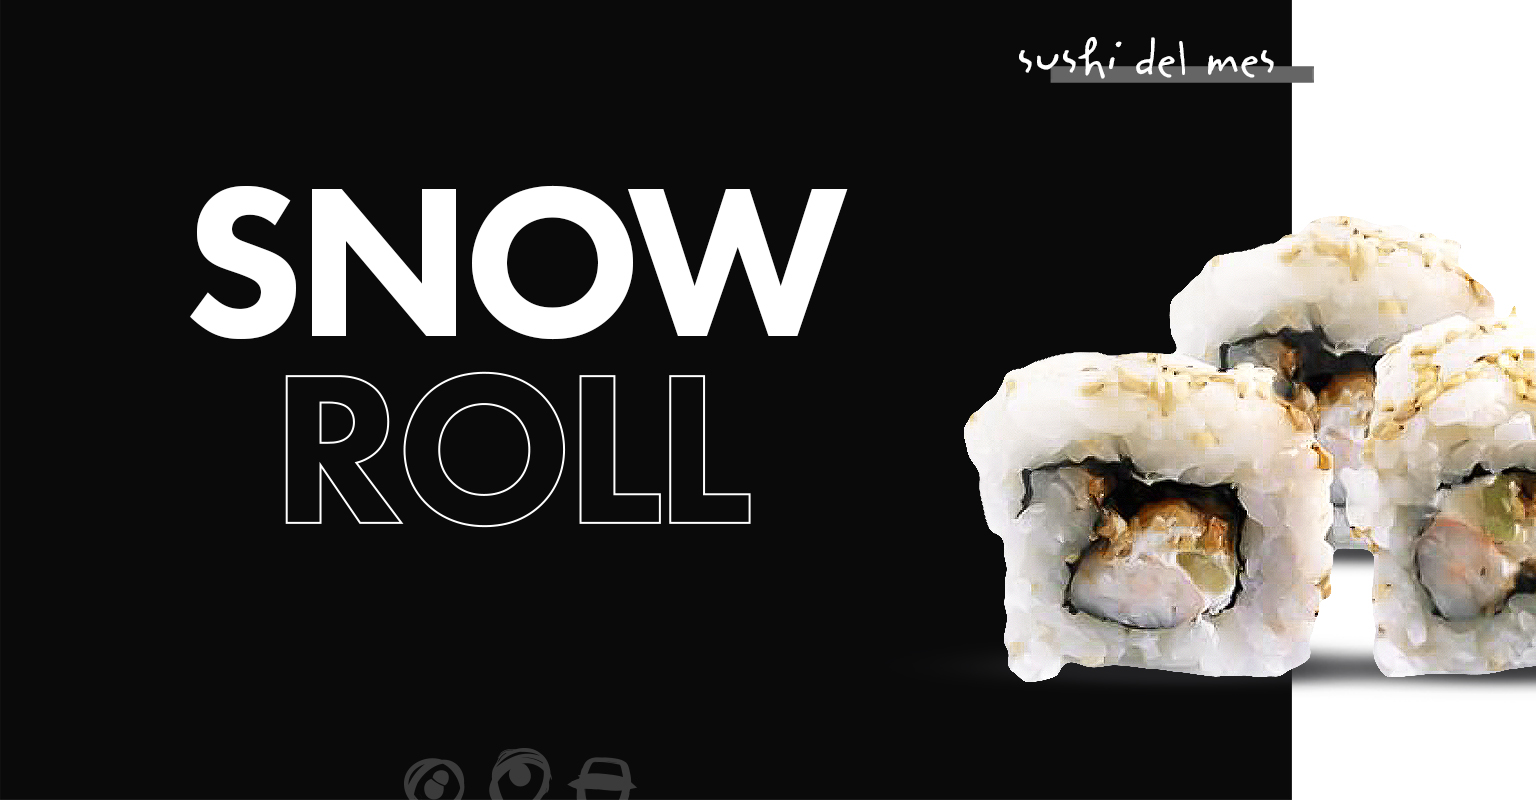 Sushi del mes: Snow Roll